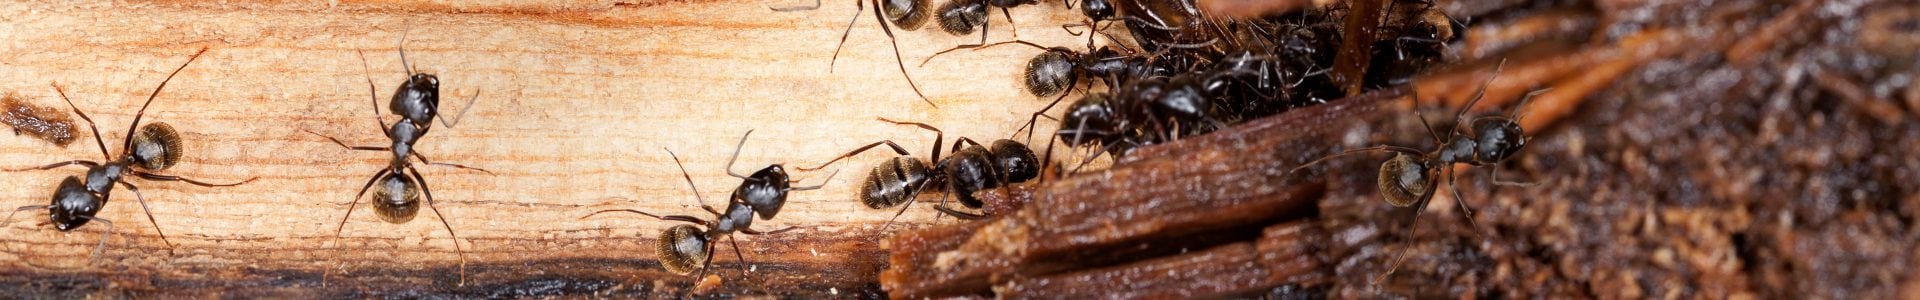 Ant Control & Ant Exterminator Services